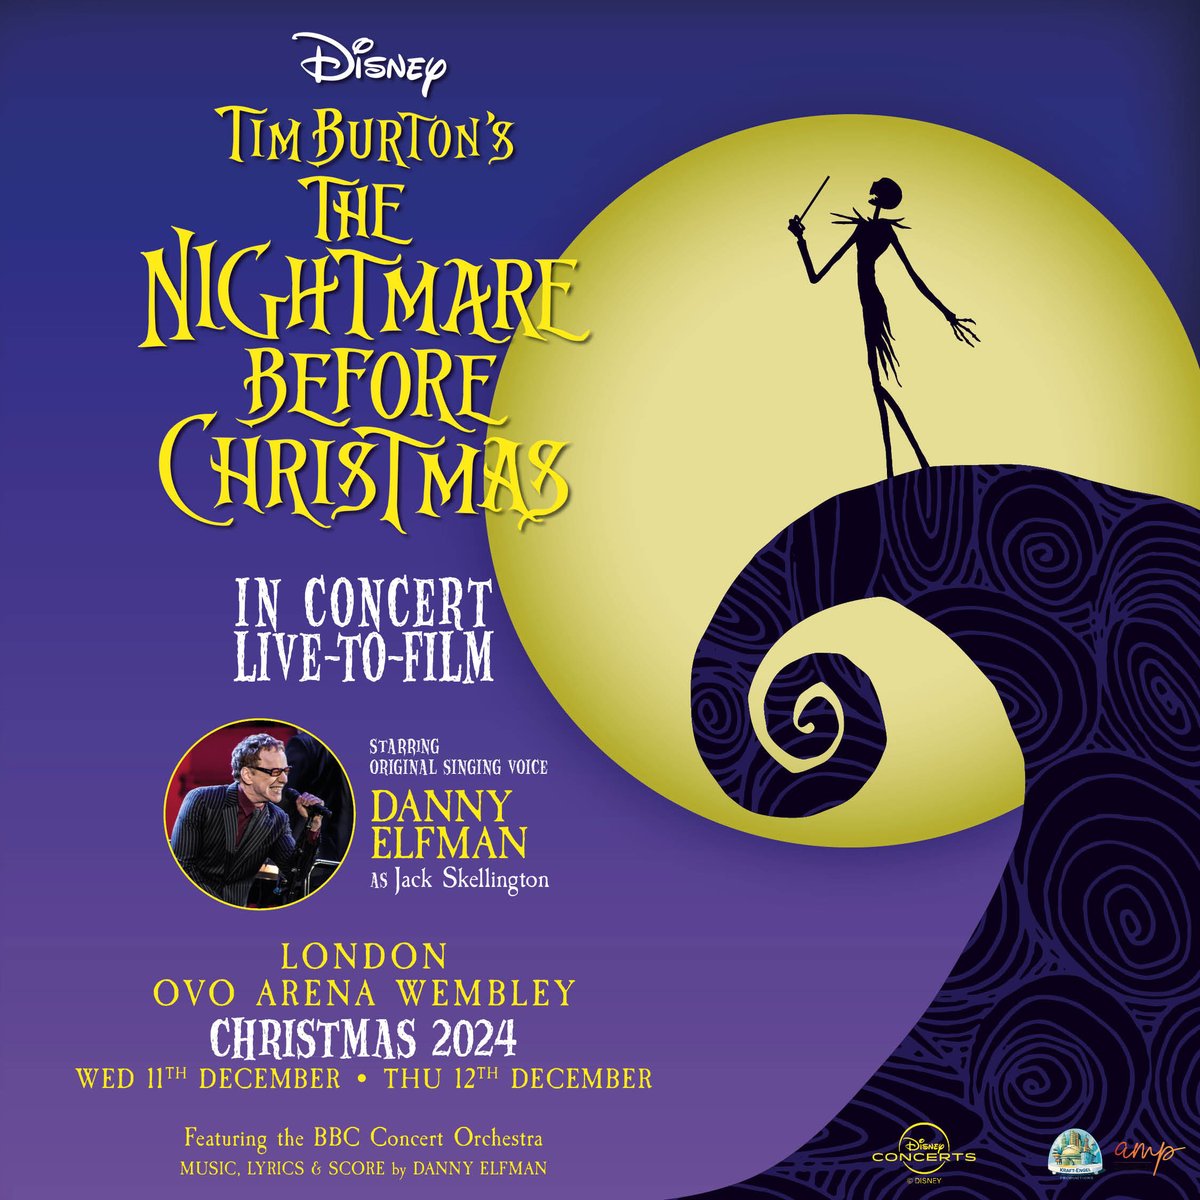 .@dannyelfman announces #NightmareBeforeChristmas show at @OVOArena at #Christmas 2024 soundspheremag.com/news/danny-elf…